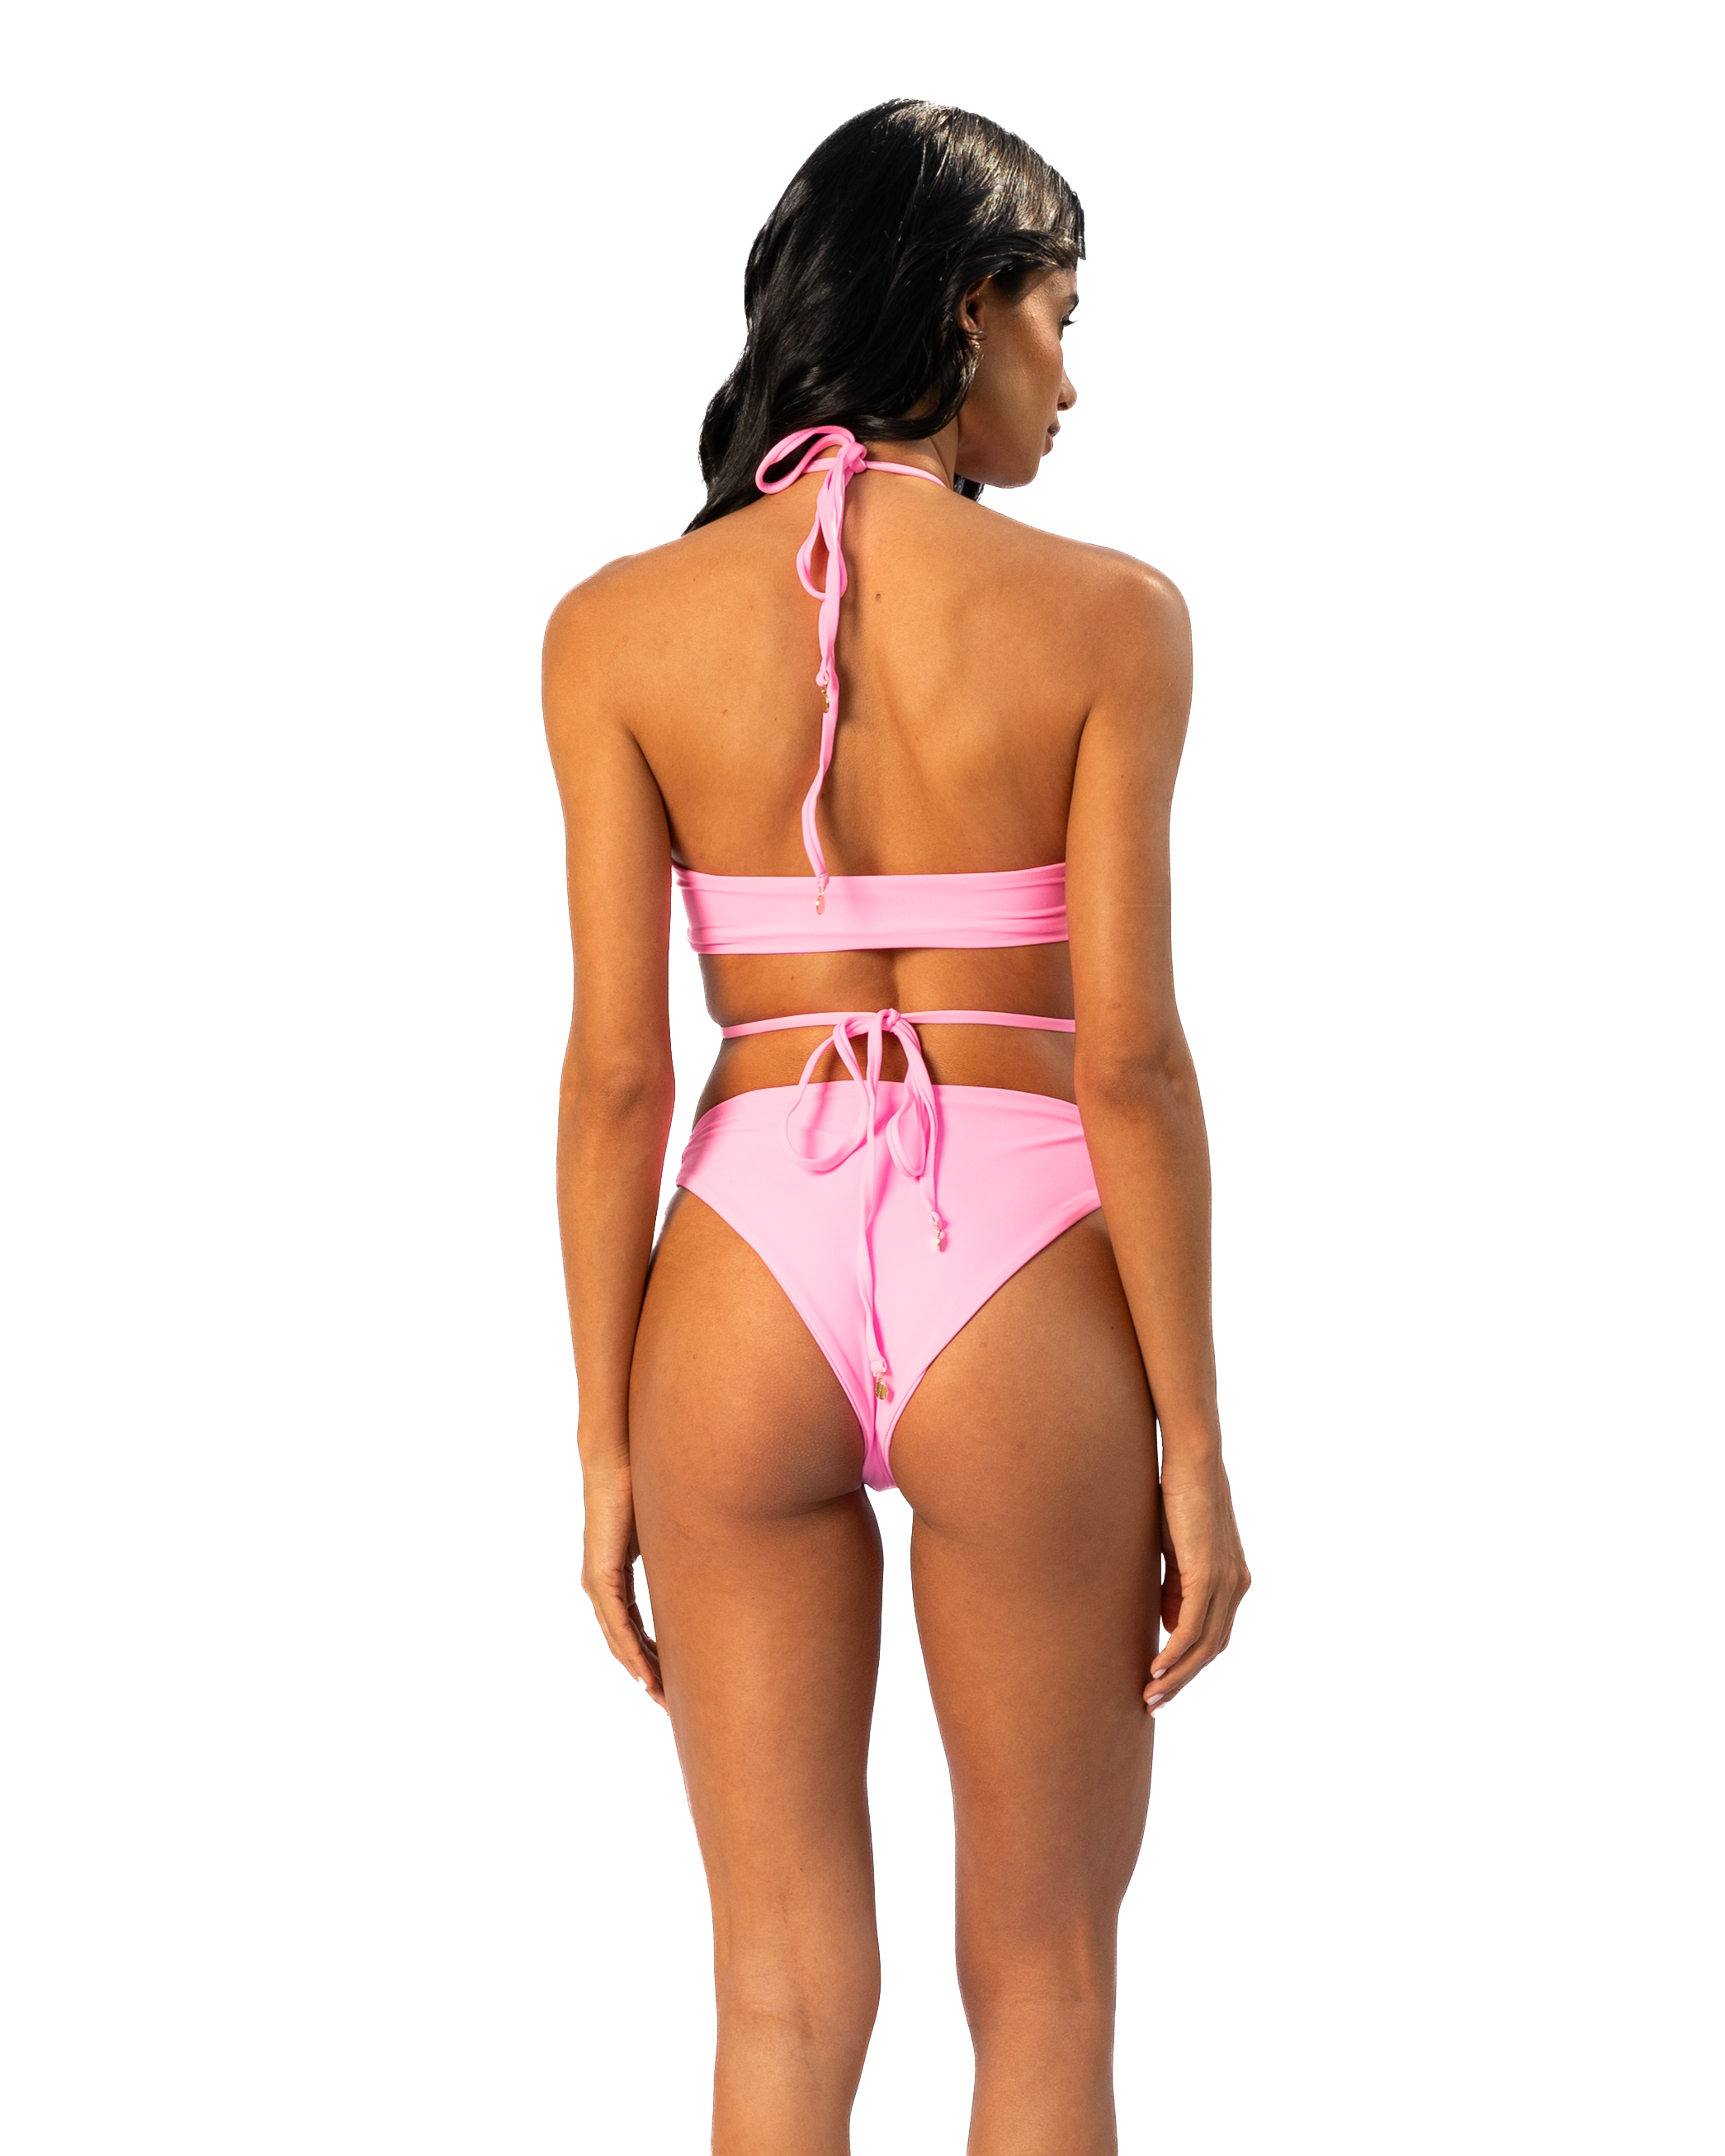 Lucida  Bottom Side-Tie Bikini |Pink